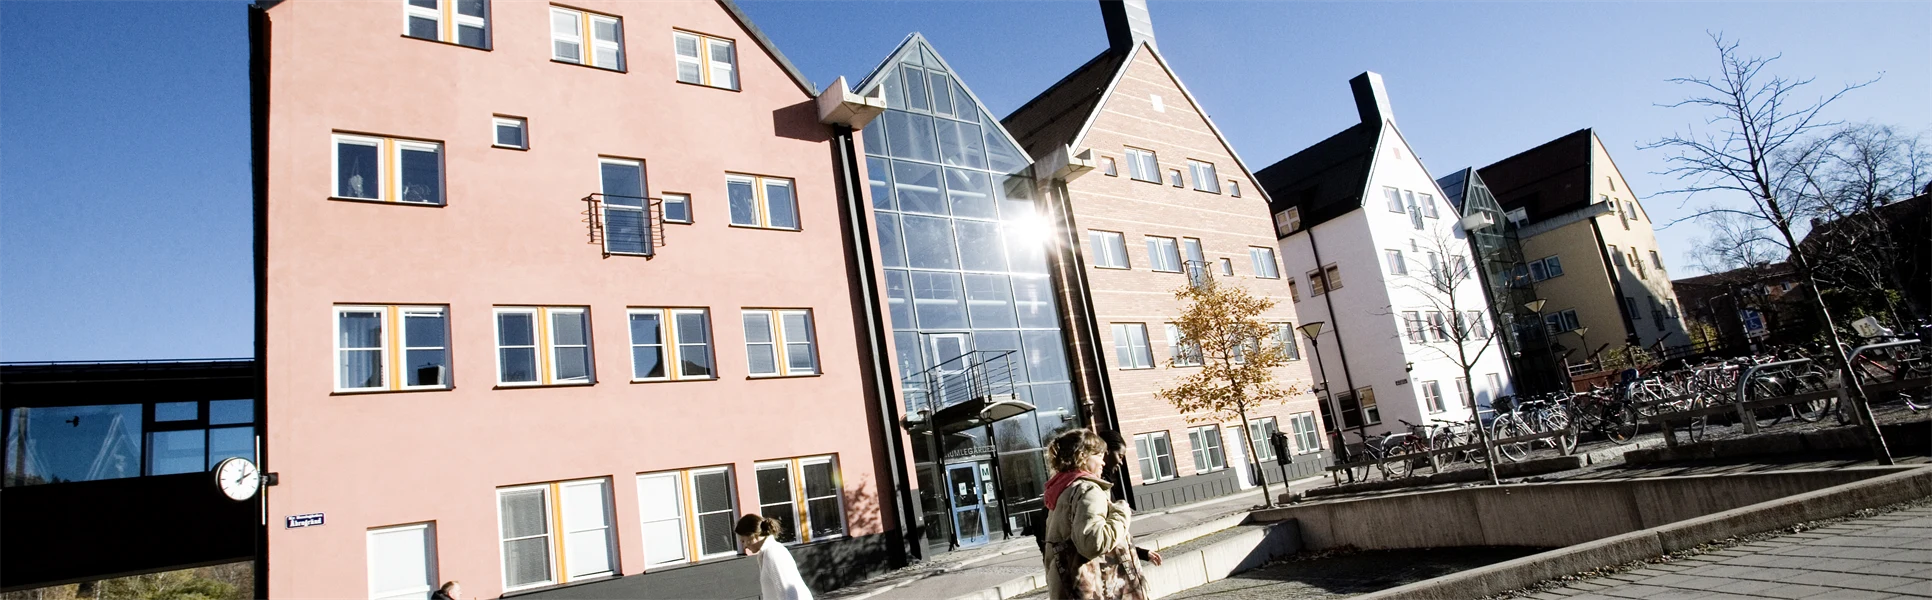 Campus Sundsvall